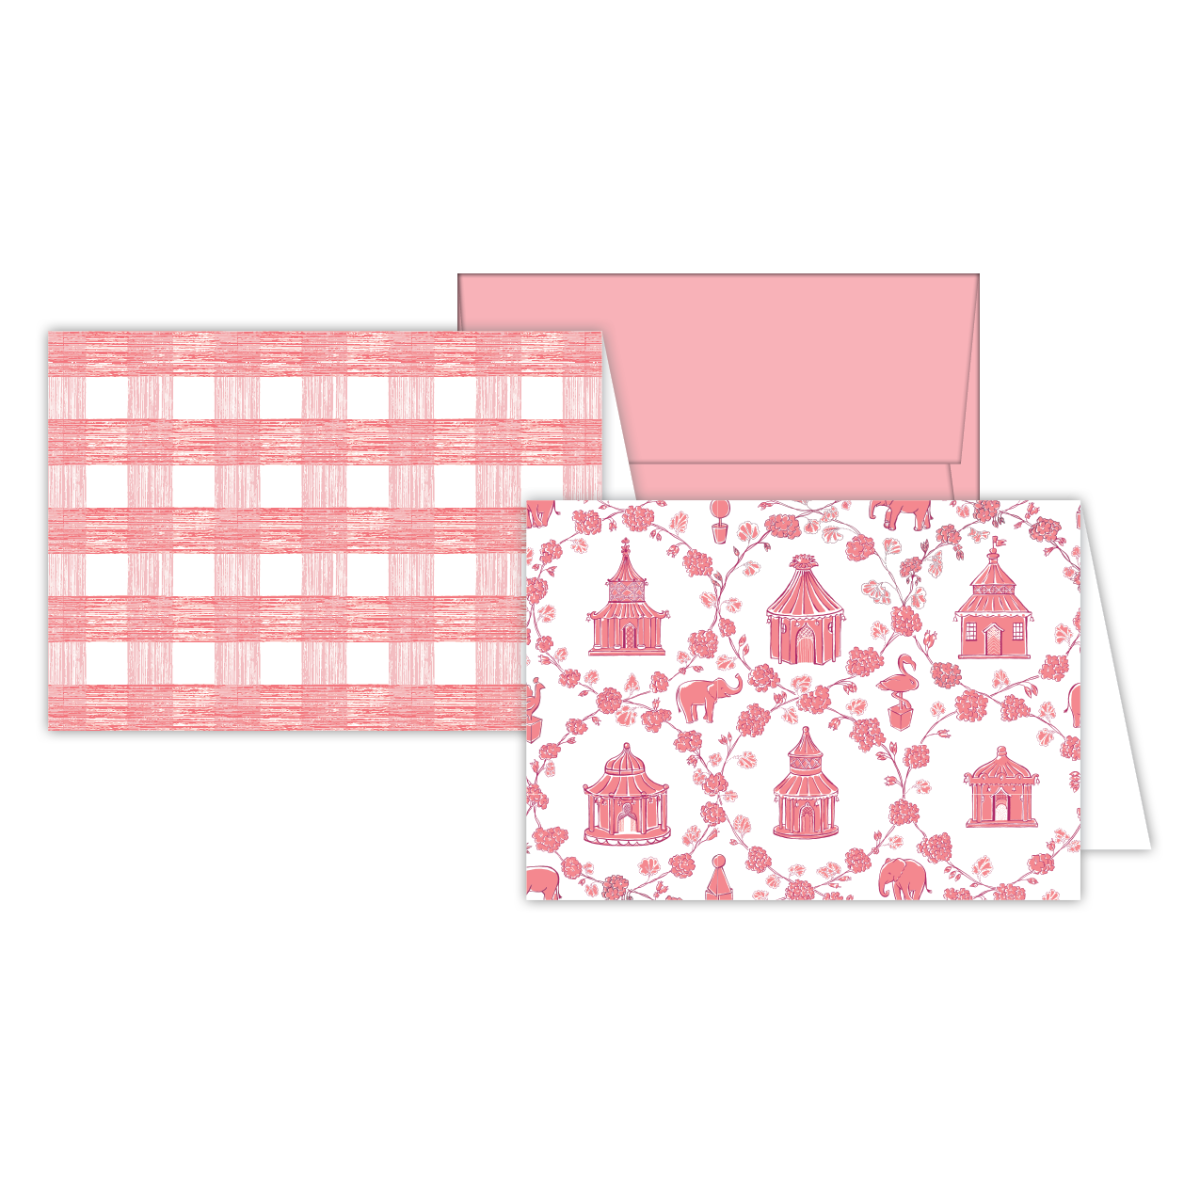 Into the Garden Coral/Gin Lane Pink Petite Notecard Set